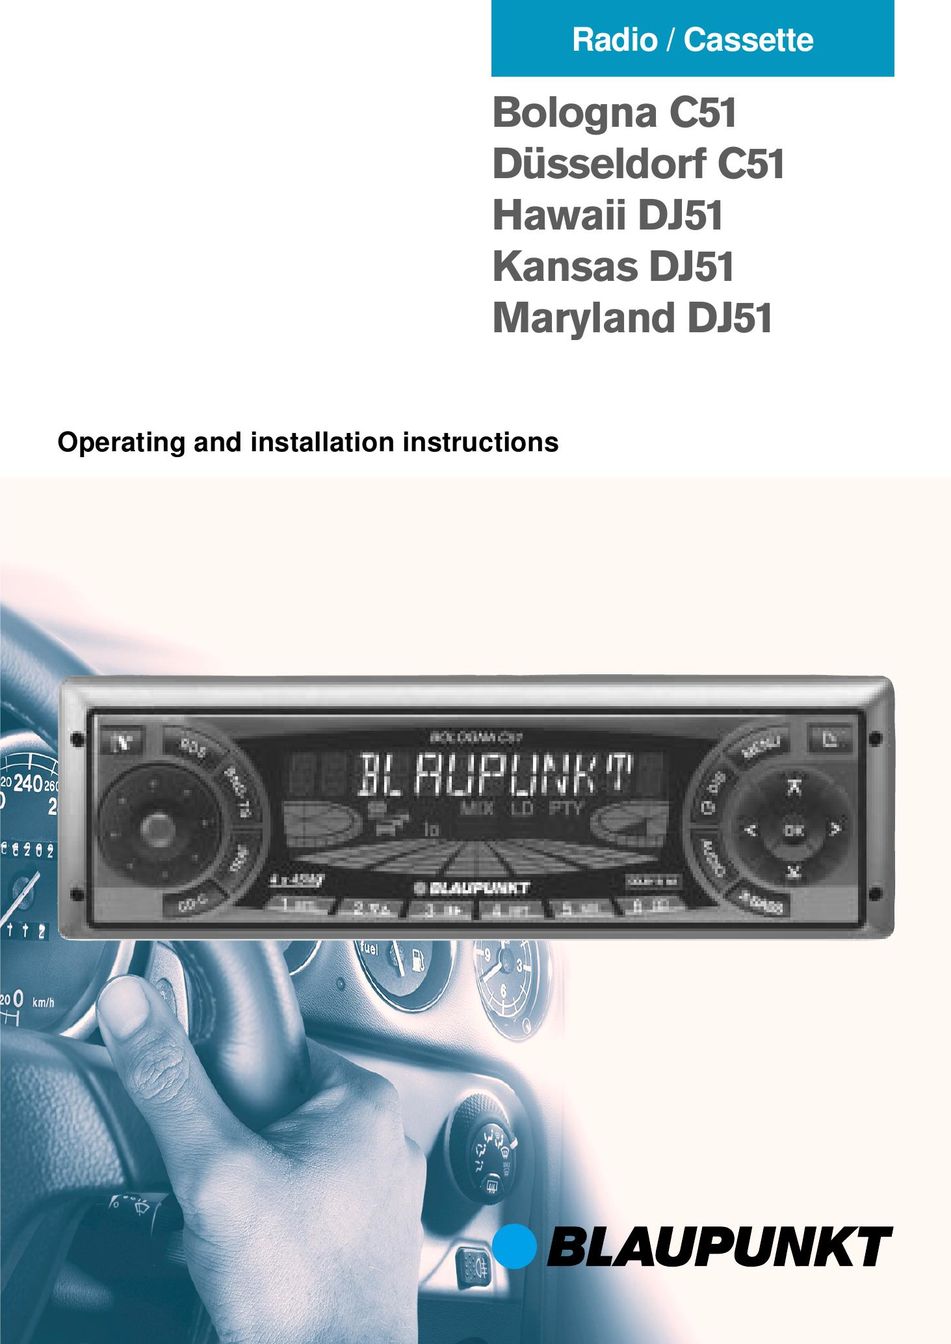 Blaupunkt Dsseldorf C51 Portable Radio User Manual